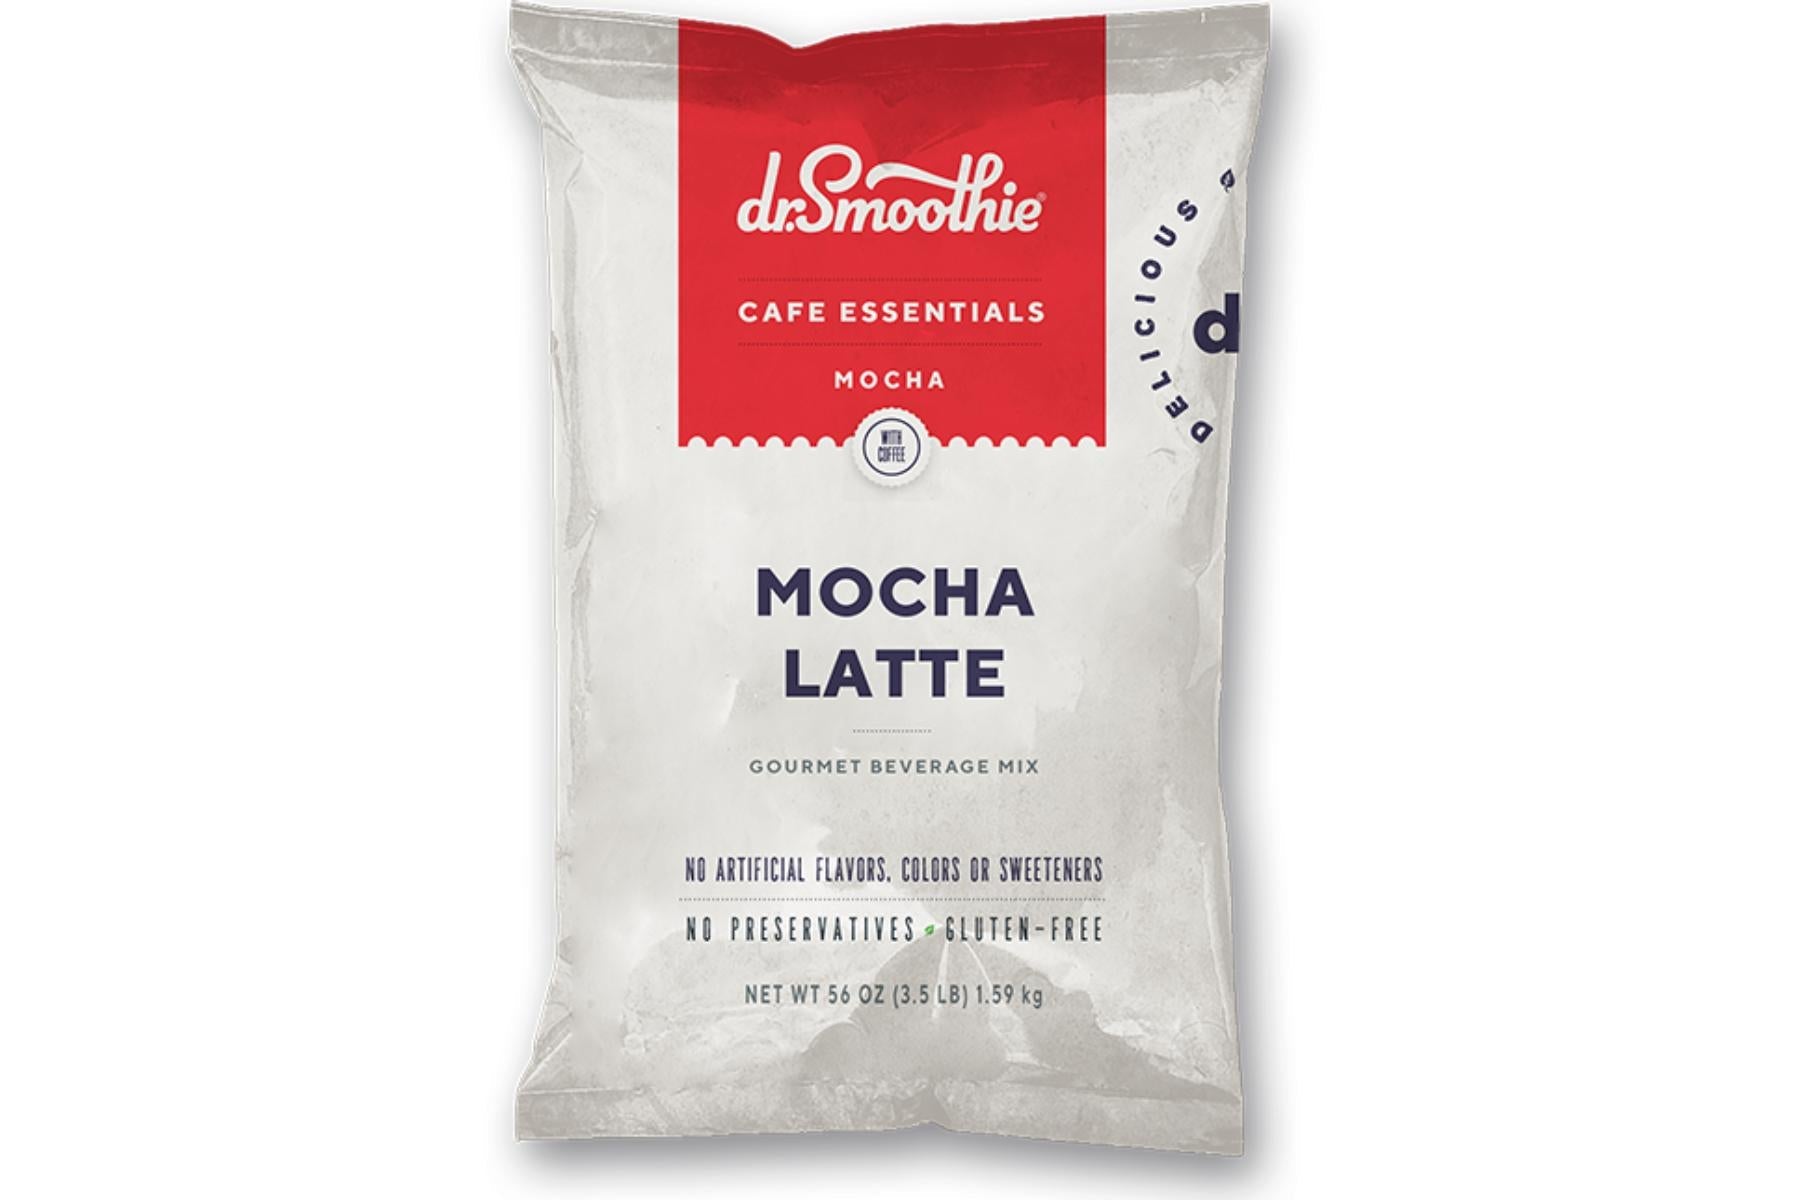 Dr. Smoothie Cafe Essentials Mocha - 3.5lb Bulk Bag: Mocha Latte